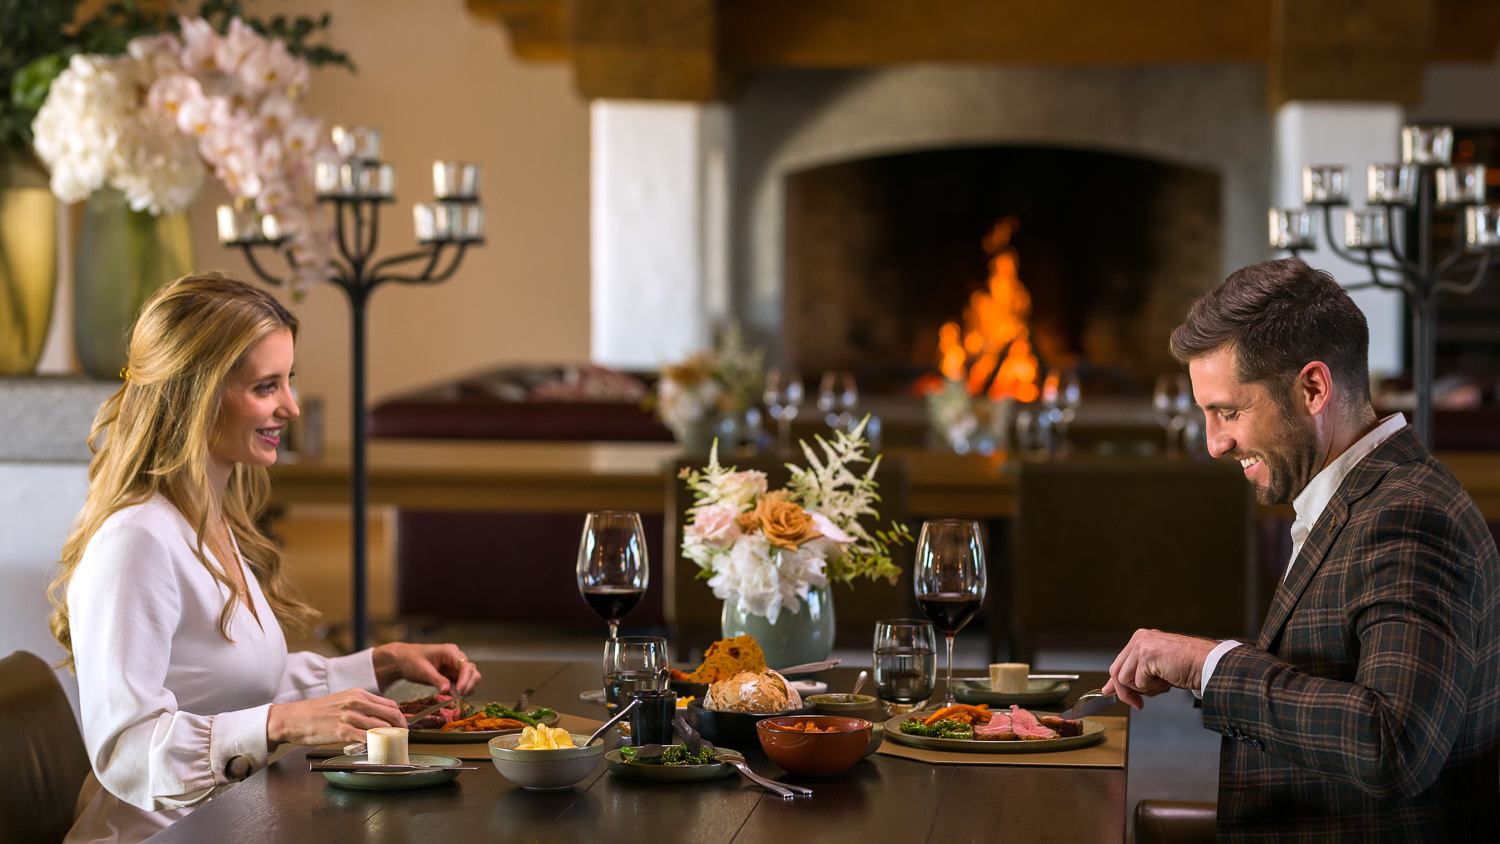 BH_Oak Grill_Interior_Fireplace_Food_Wine_People_2